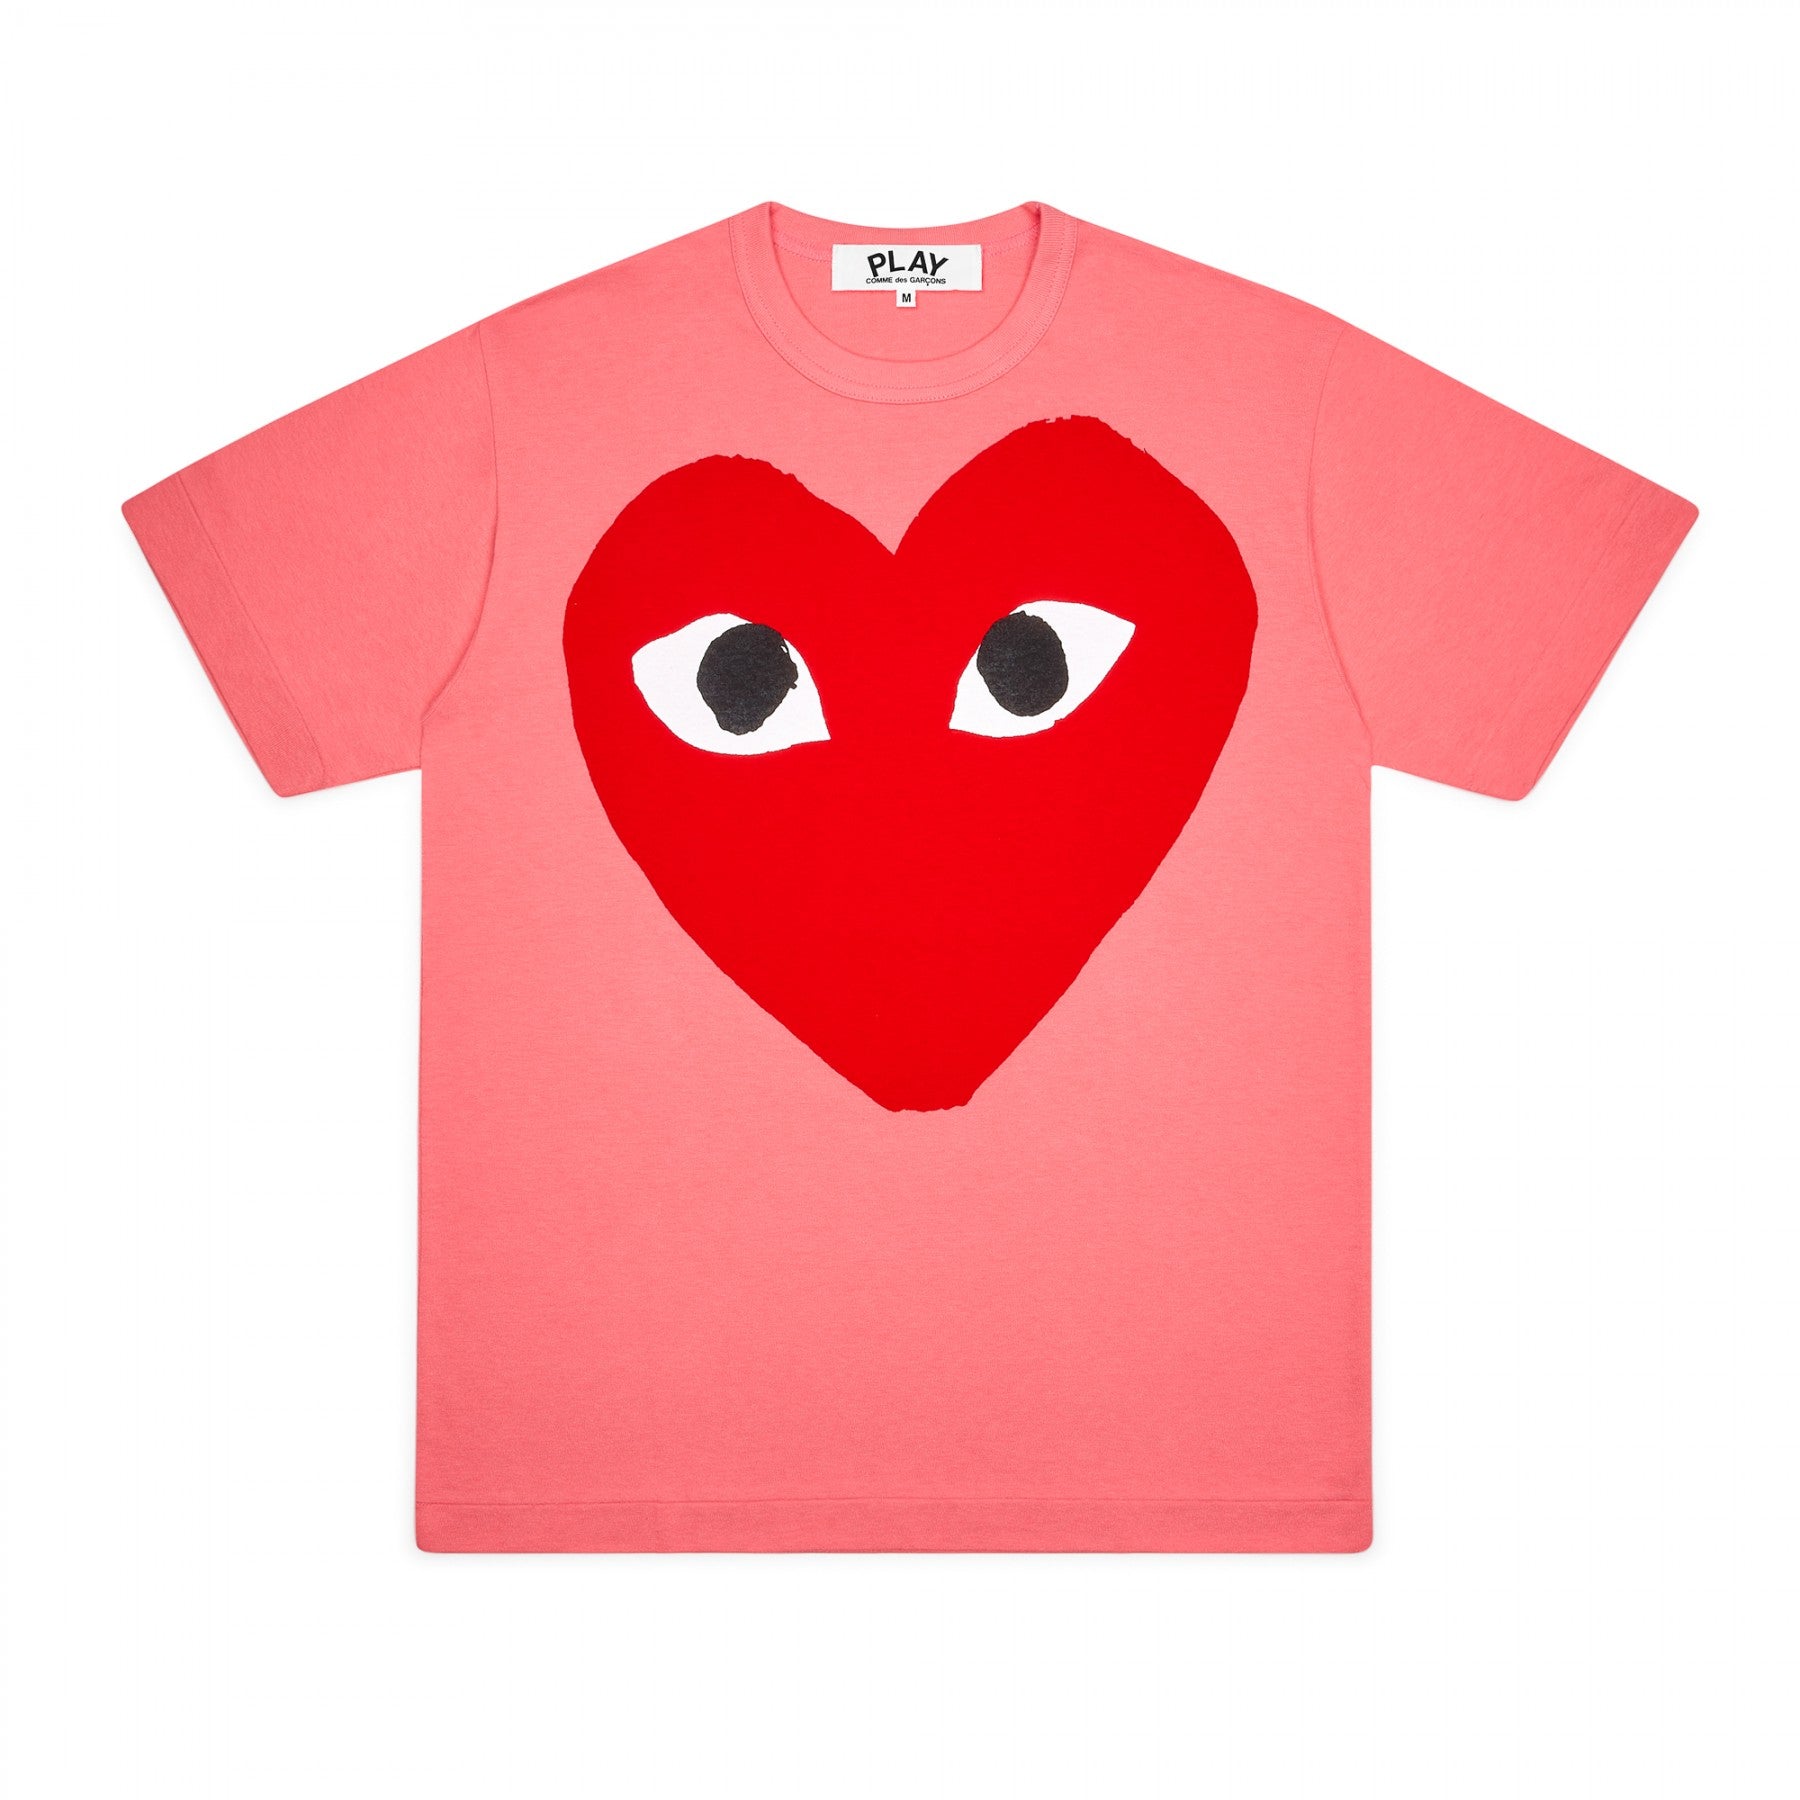 PLAY Red Heart Screenprint T-Shirt Spring Series (Pink)